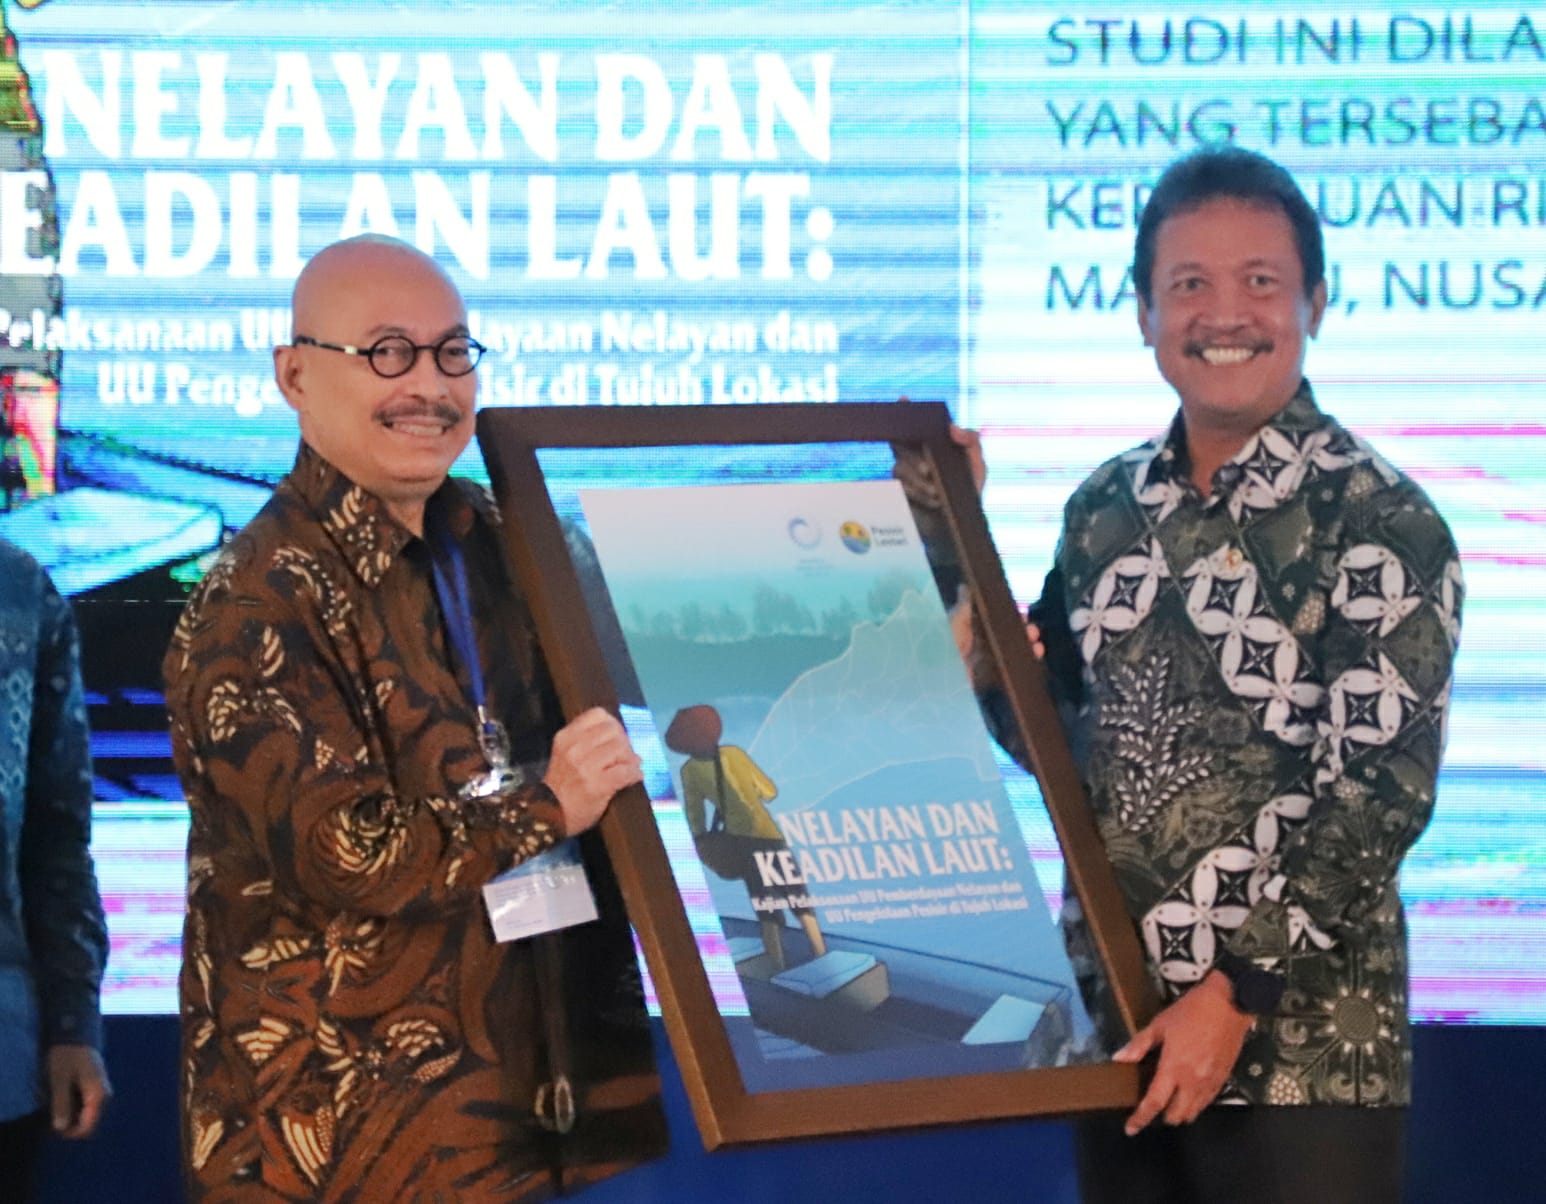 Menteri Kelautan dan Perikanan Sakti Wahyu Trenggono (kanan) bersama CEO Indonesia Ocean Justice Initiative Mas Achmad Santosa saat meluncurkan kajian berjudul “Nelayan dan Keadilan Laut: Dampak Undang-undang Perlindungan Nelayan dan Pengelolaan Wilayah Pesisir bagi Kesejahteraan Nelayan Kecil”